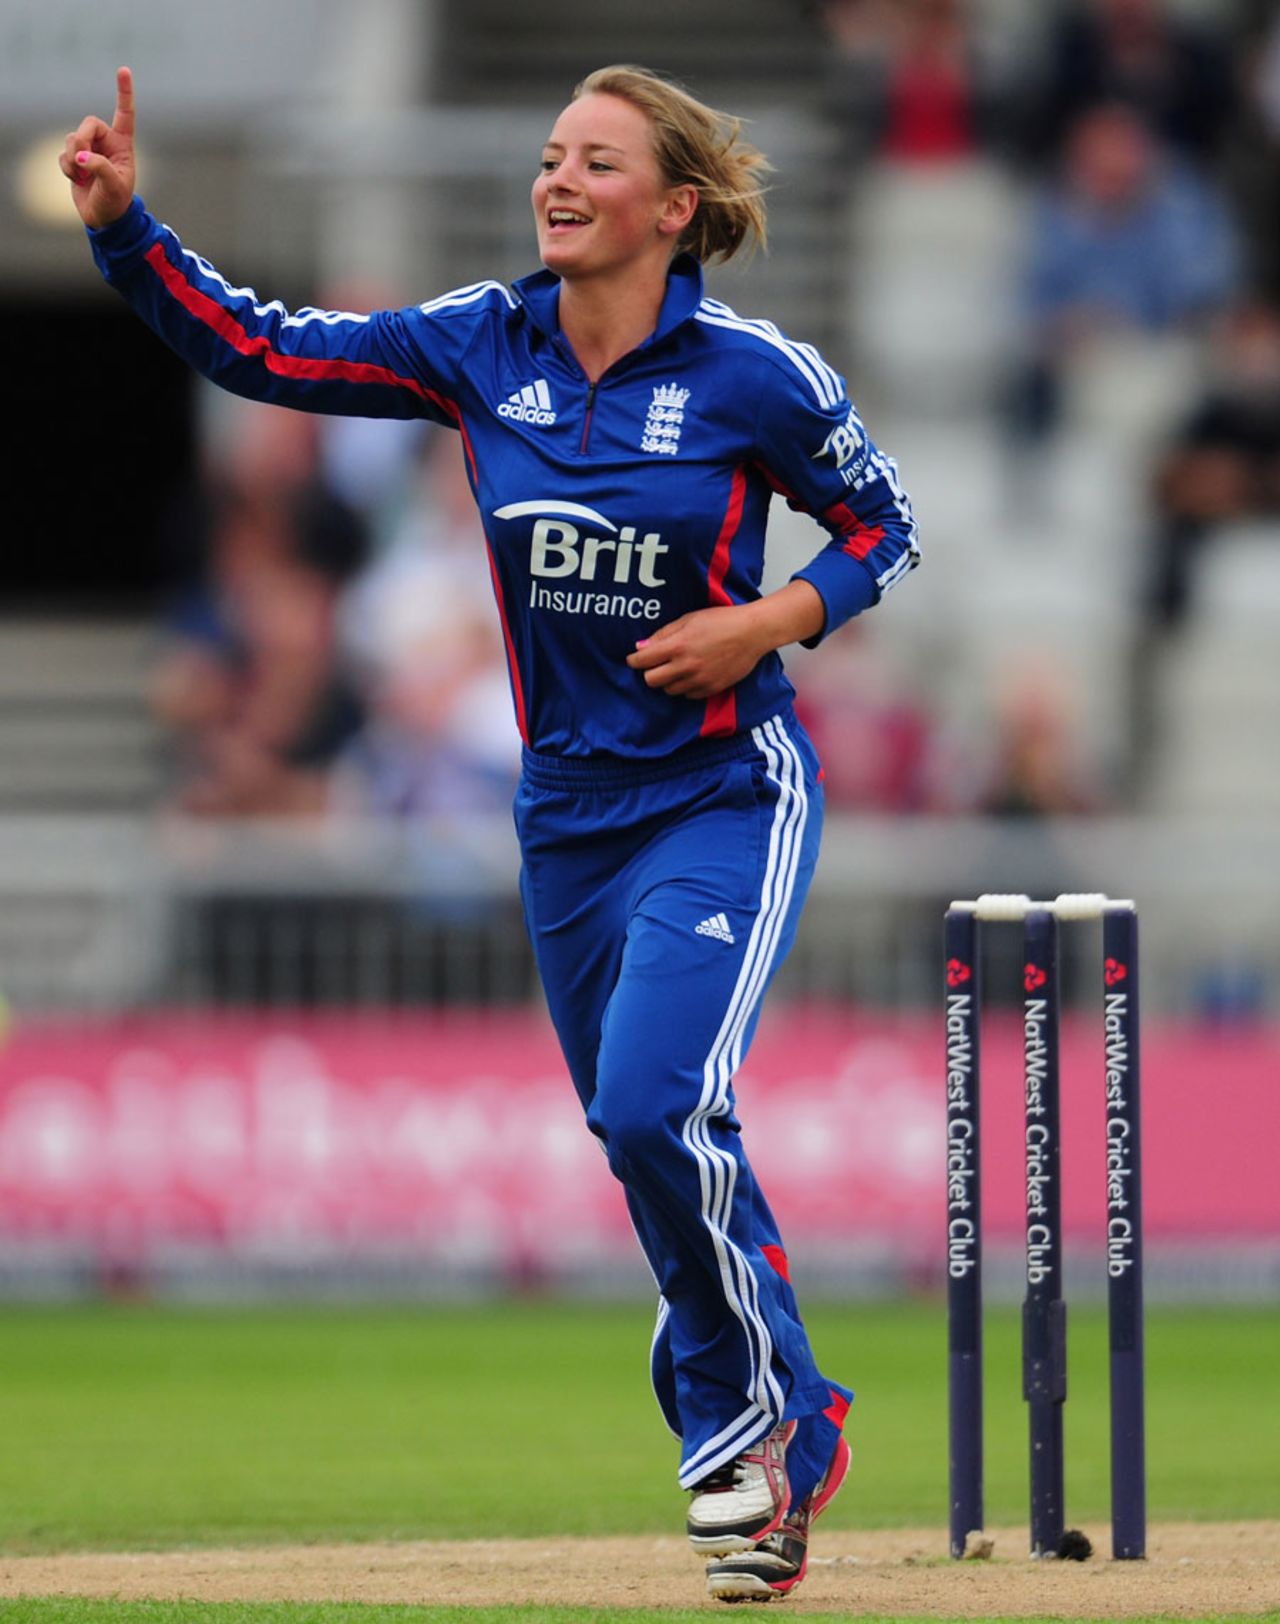 Danielle Wyatt dismissed both West Indies openers, England v West Indies, Women's T20 international, Old Trafford, September 10, 2012